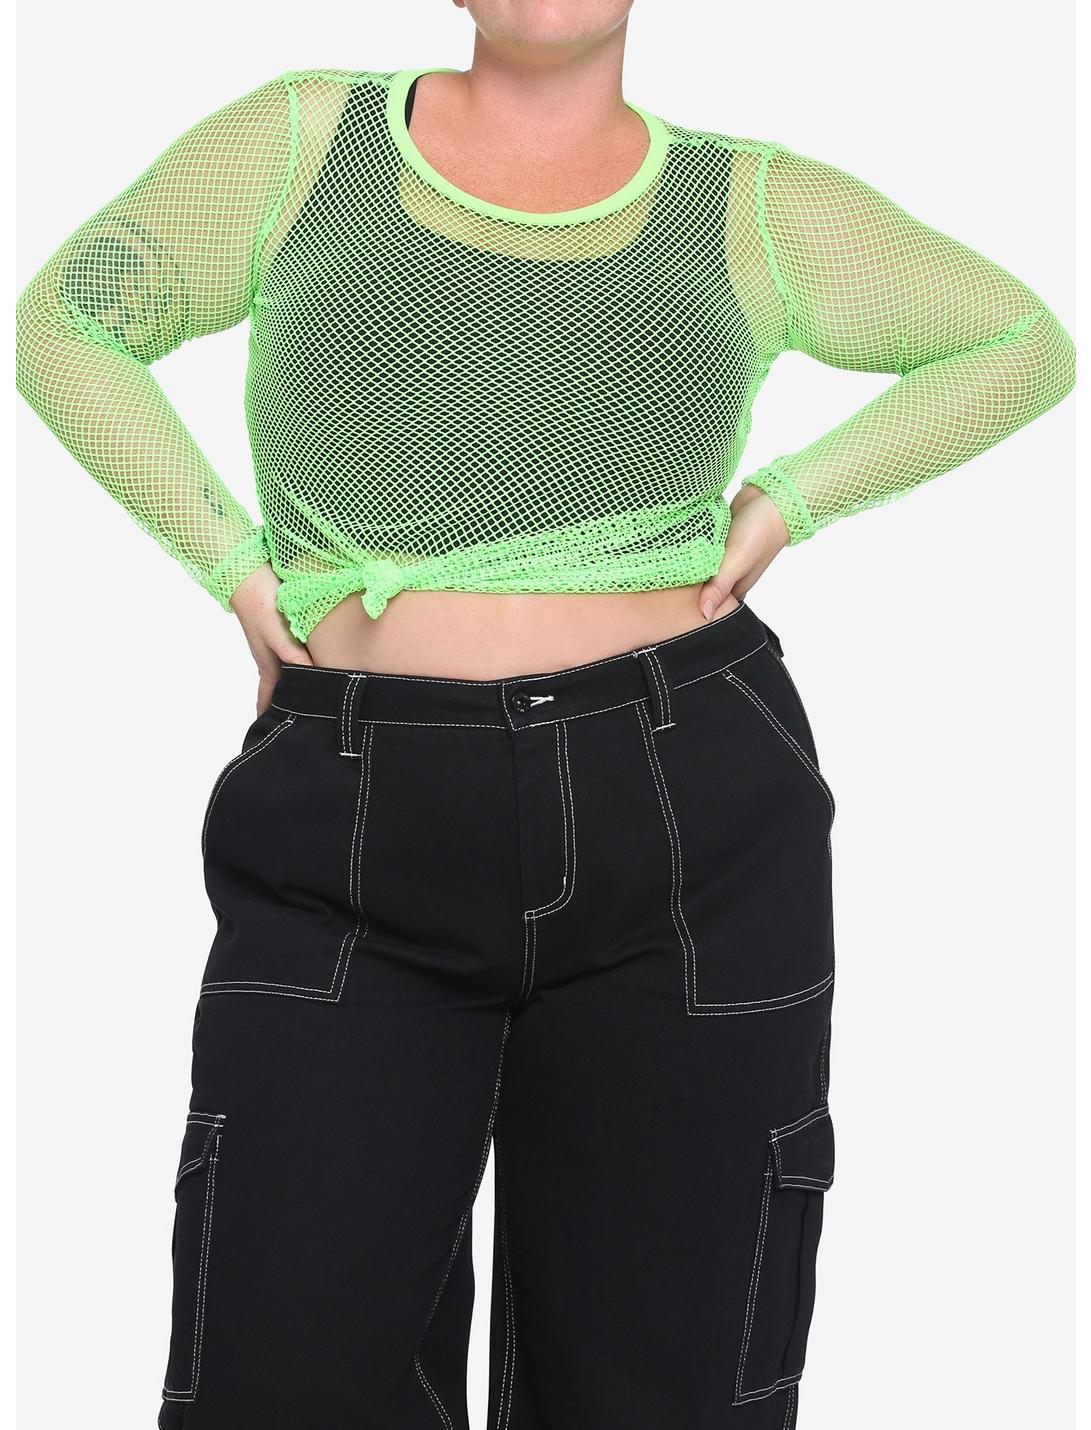 Neon Green Fishnet Long-Sleeve Girls Top Plus Size, GREEN, hi-res